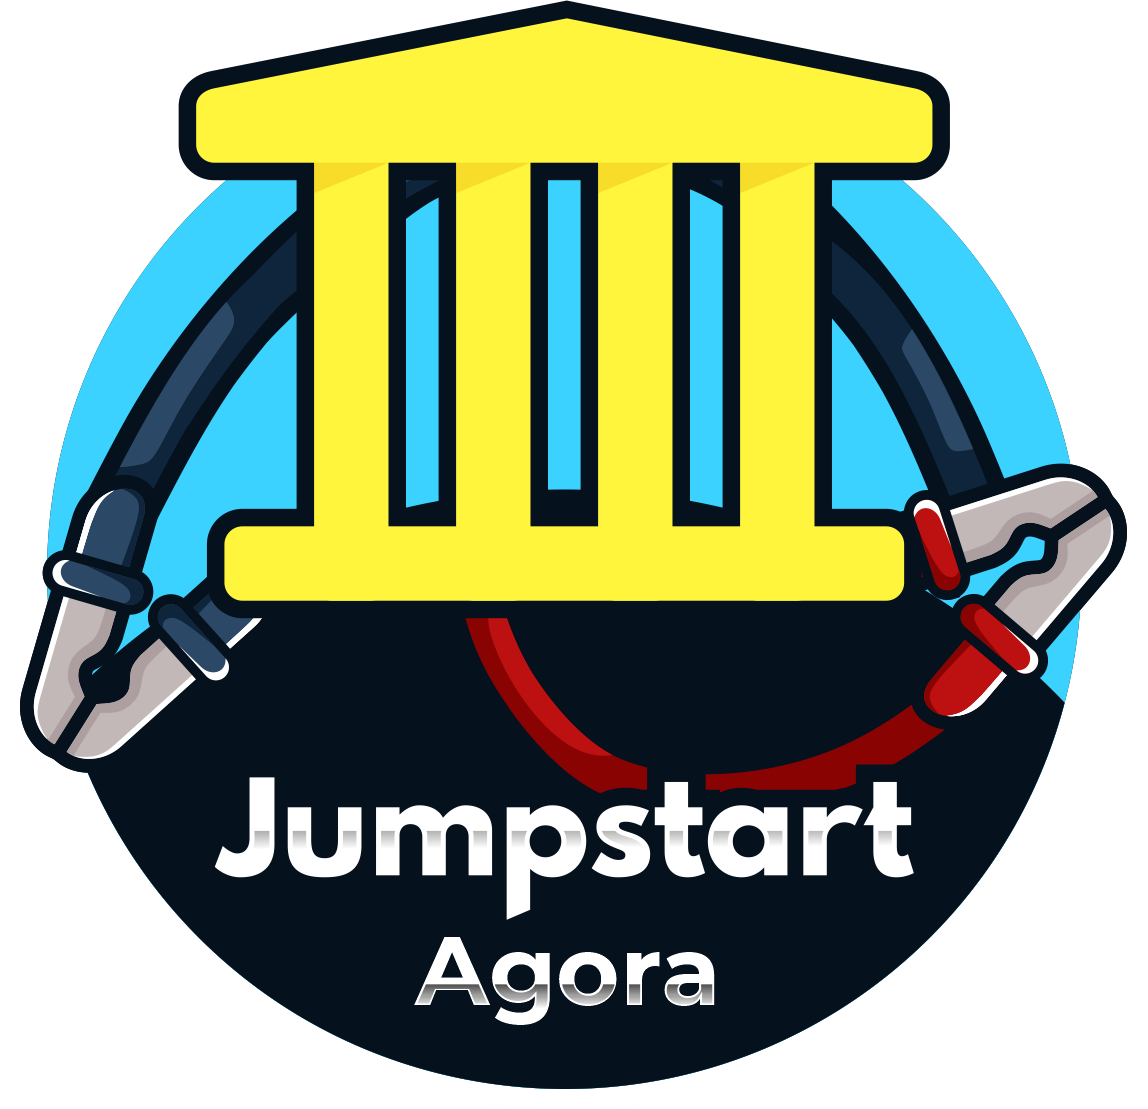 Announcing Jumpstart Agora